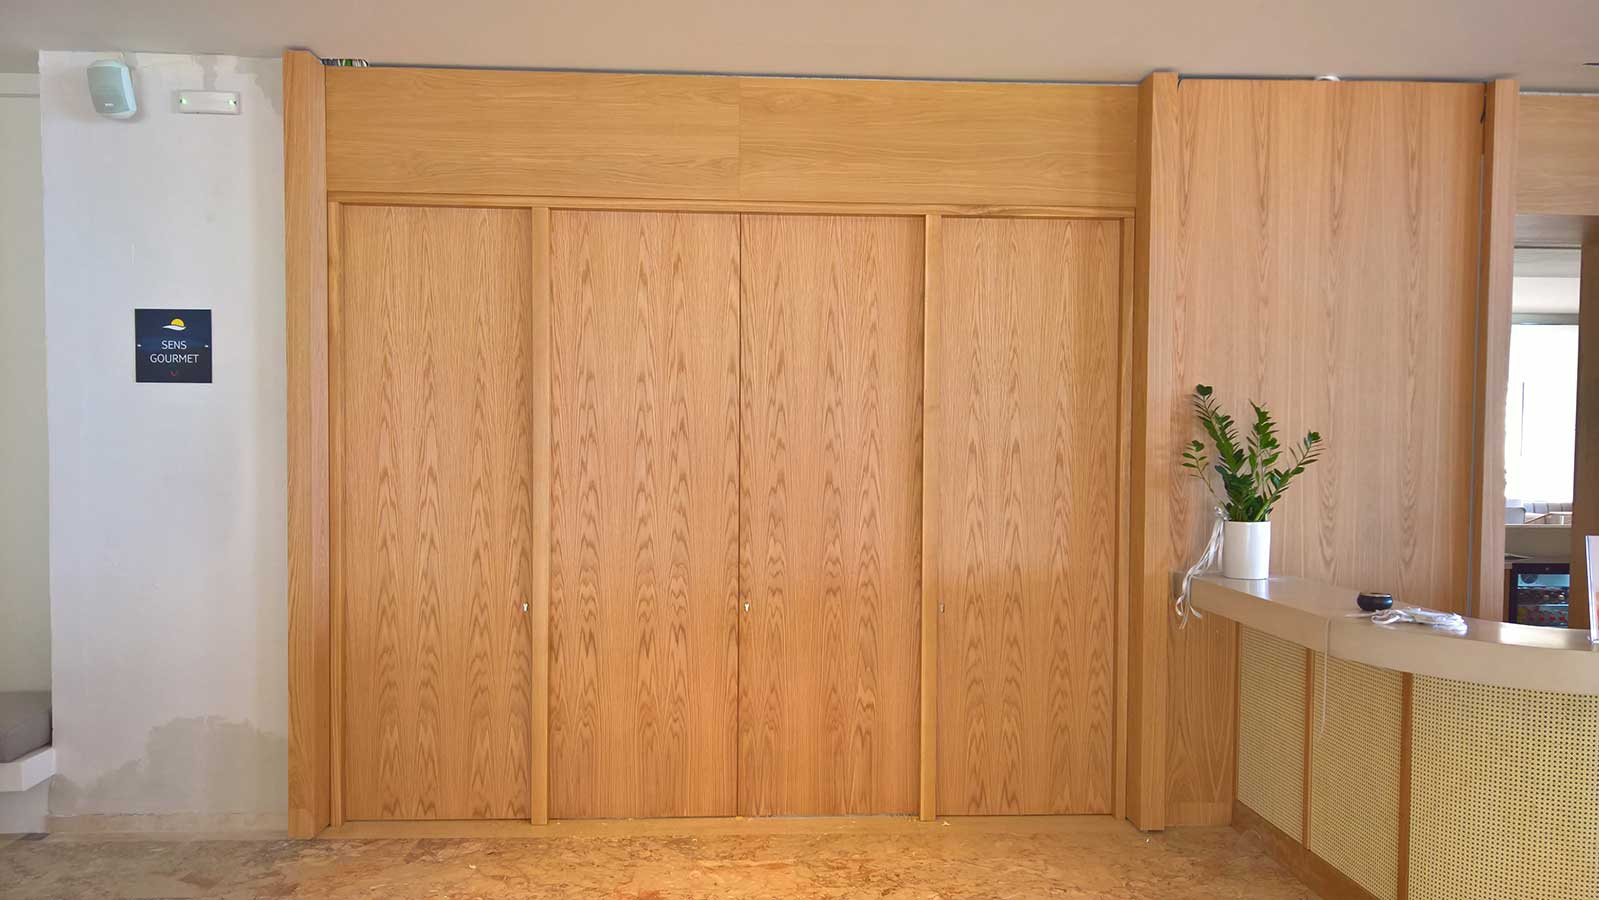 Four-section wooden door made of OAK